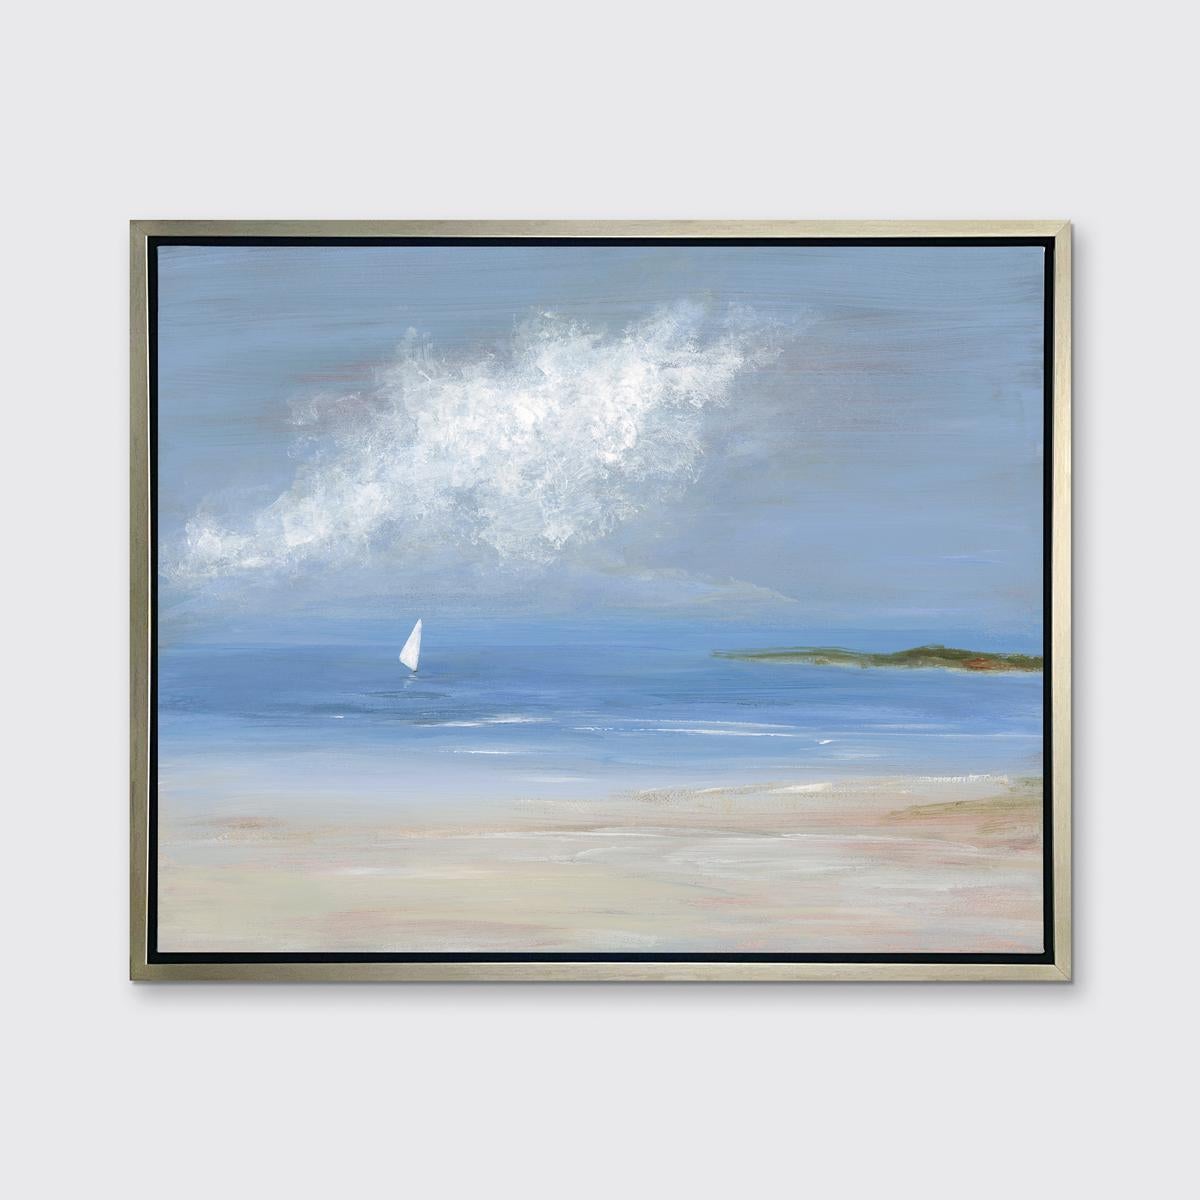 S. Cora Aldo Landscape Print - "Sunday Sail, " Framed Limited Edition Giclee Print, 40" x 50"